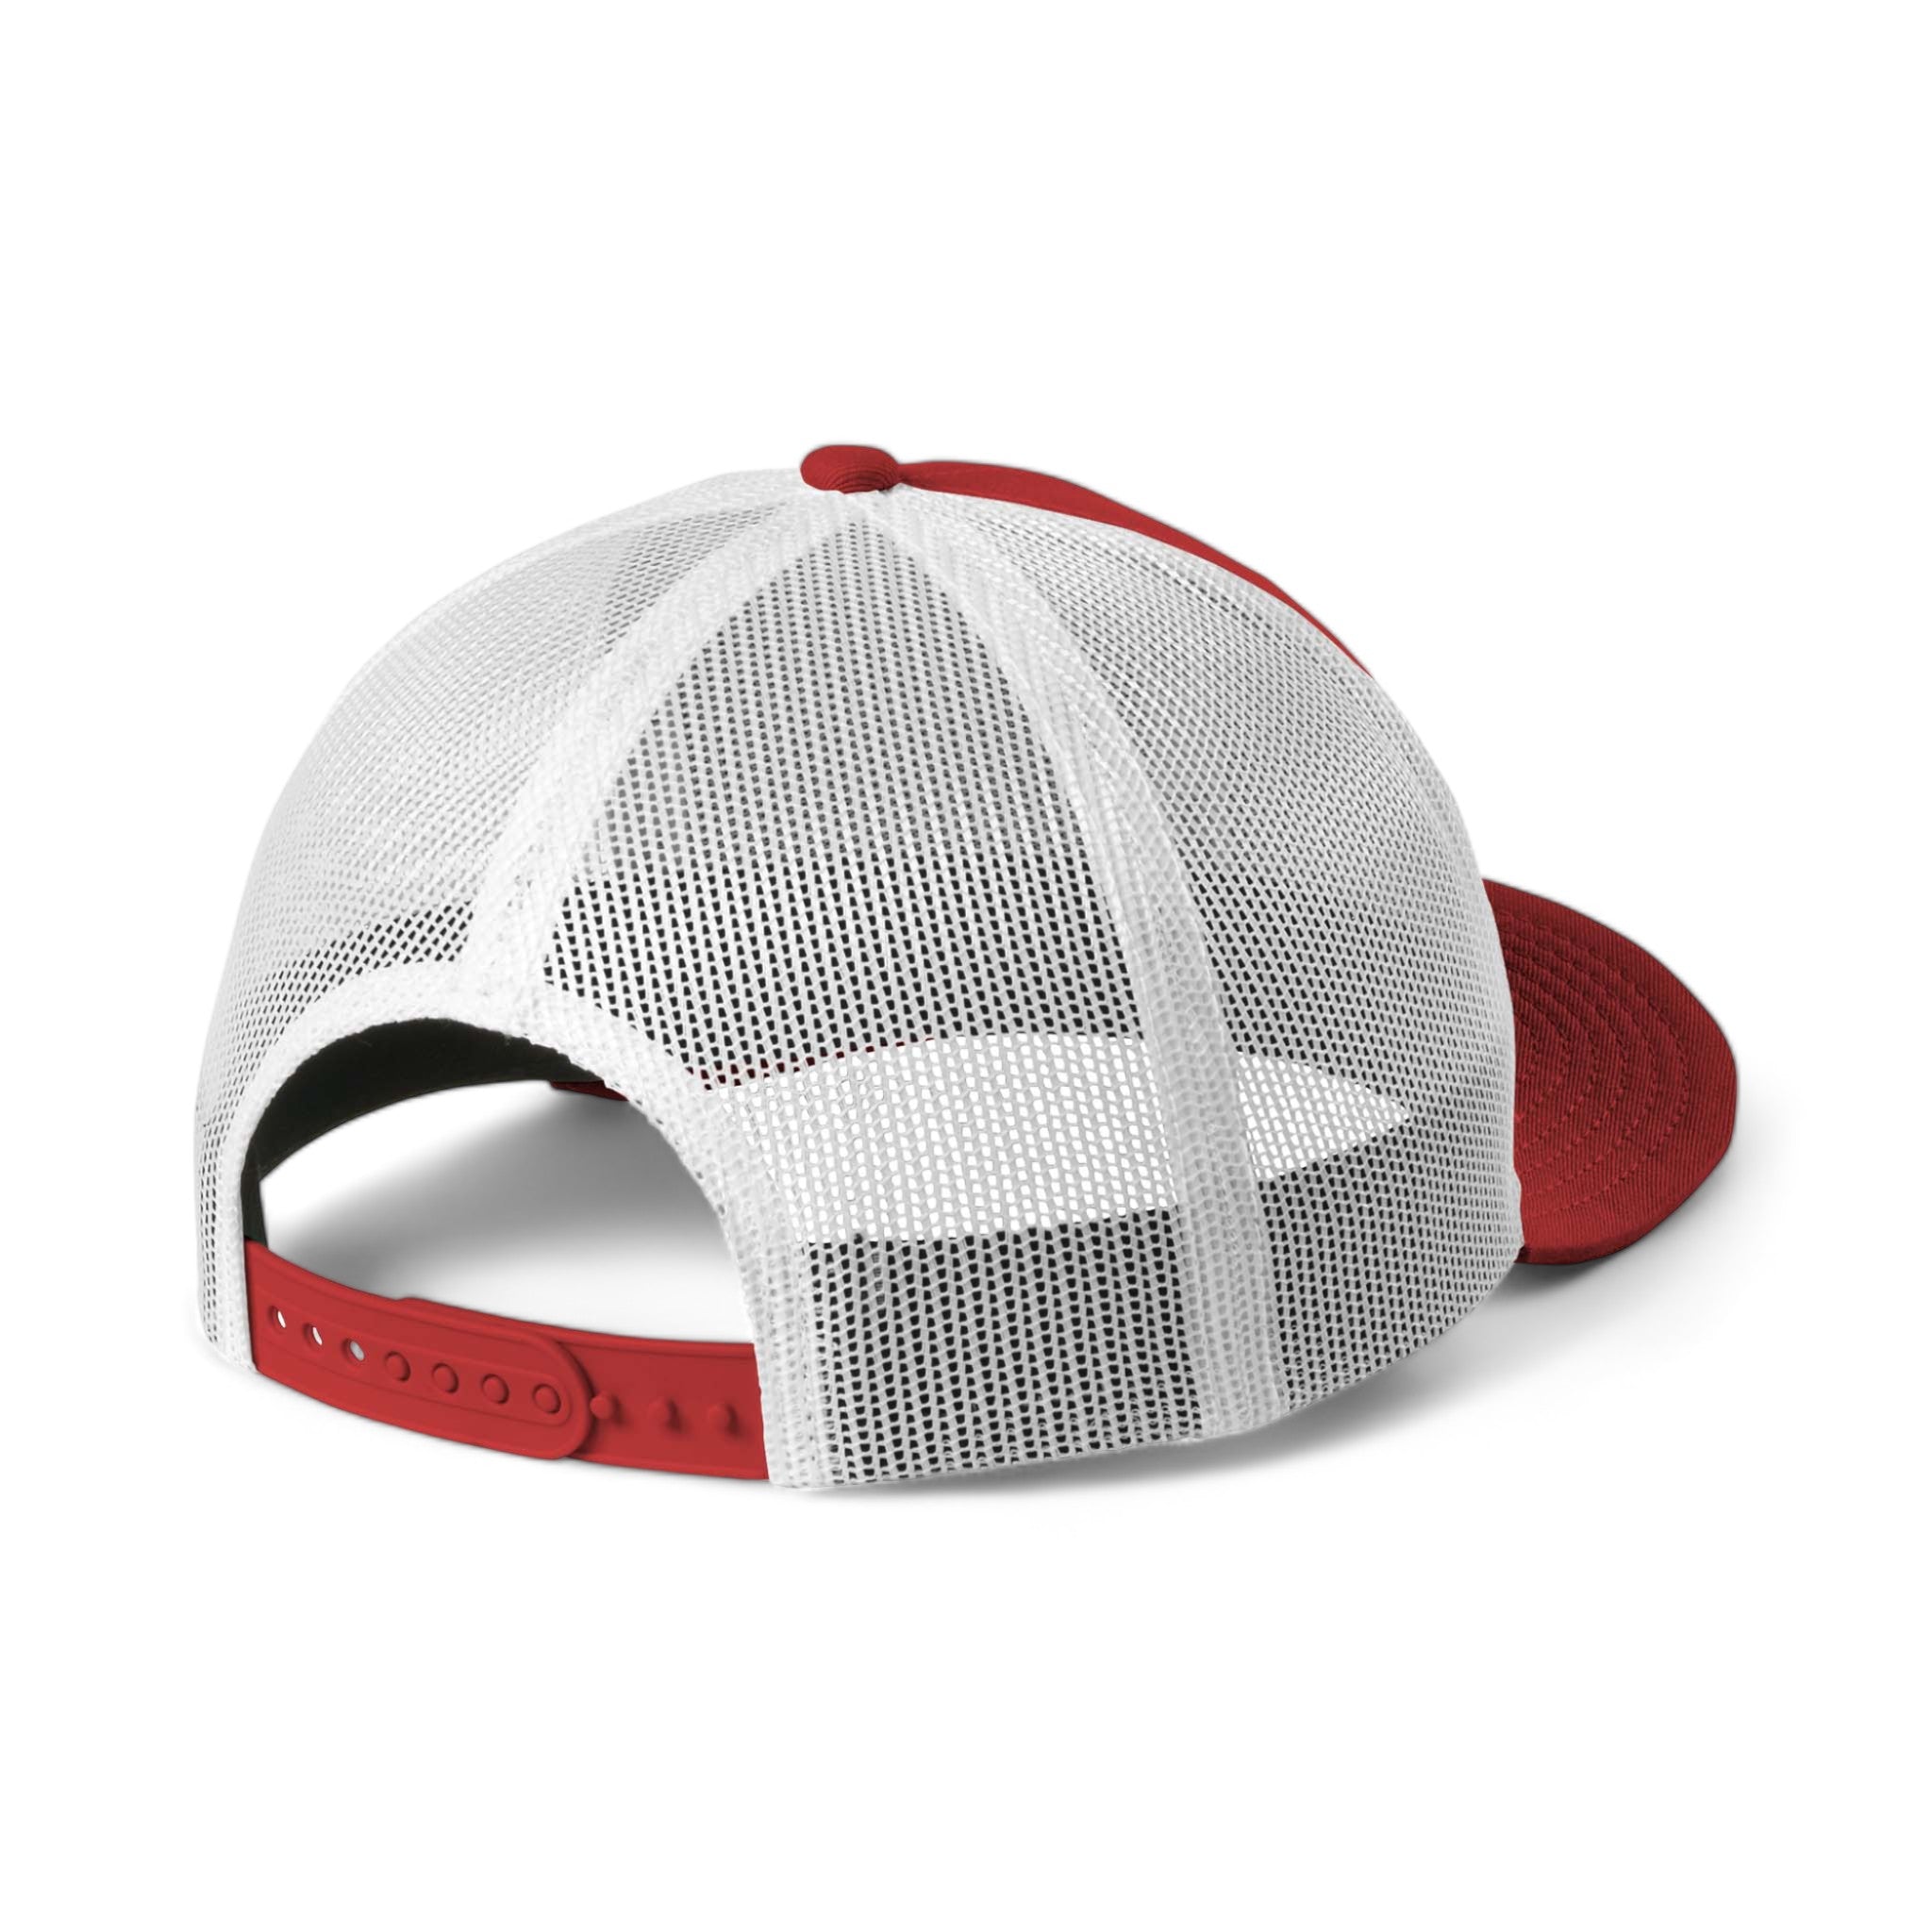 Back view of New Era NE207 custom hat in scarlet and white